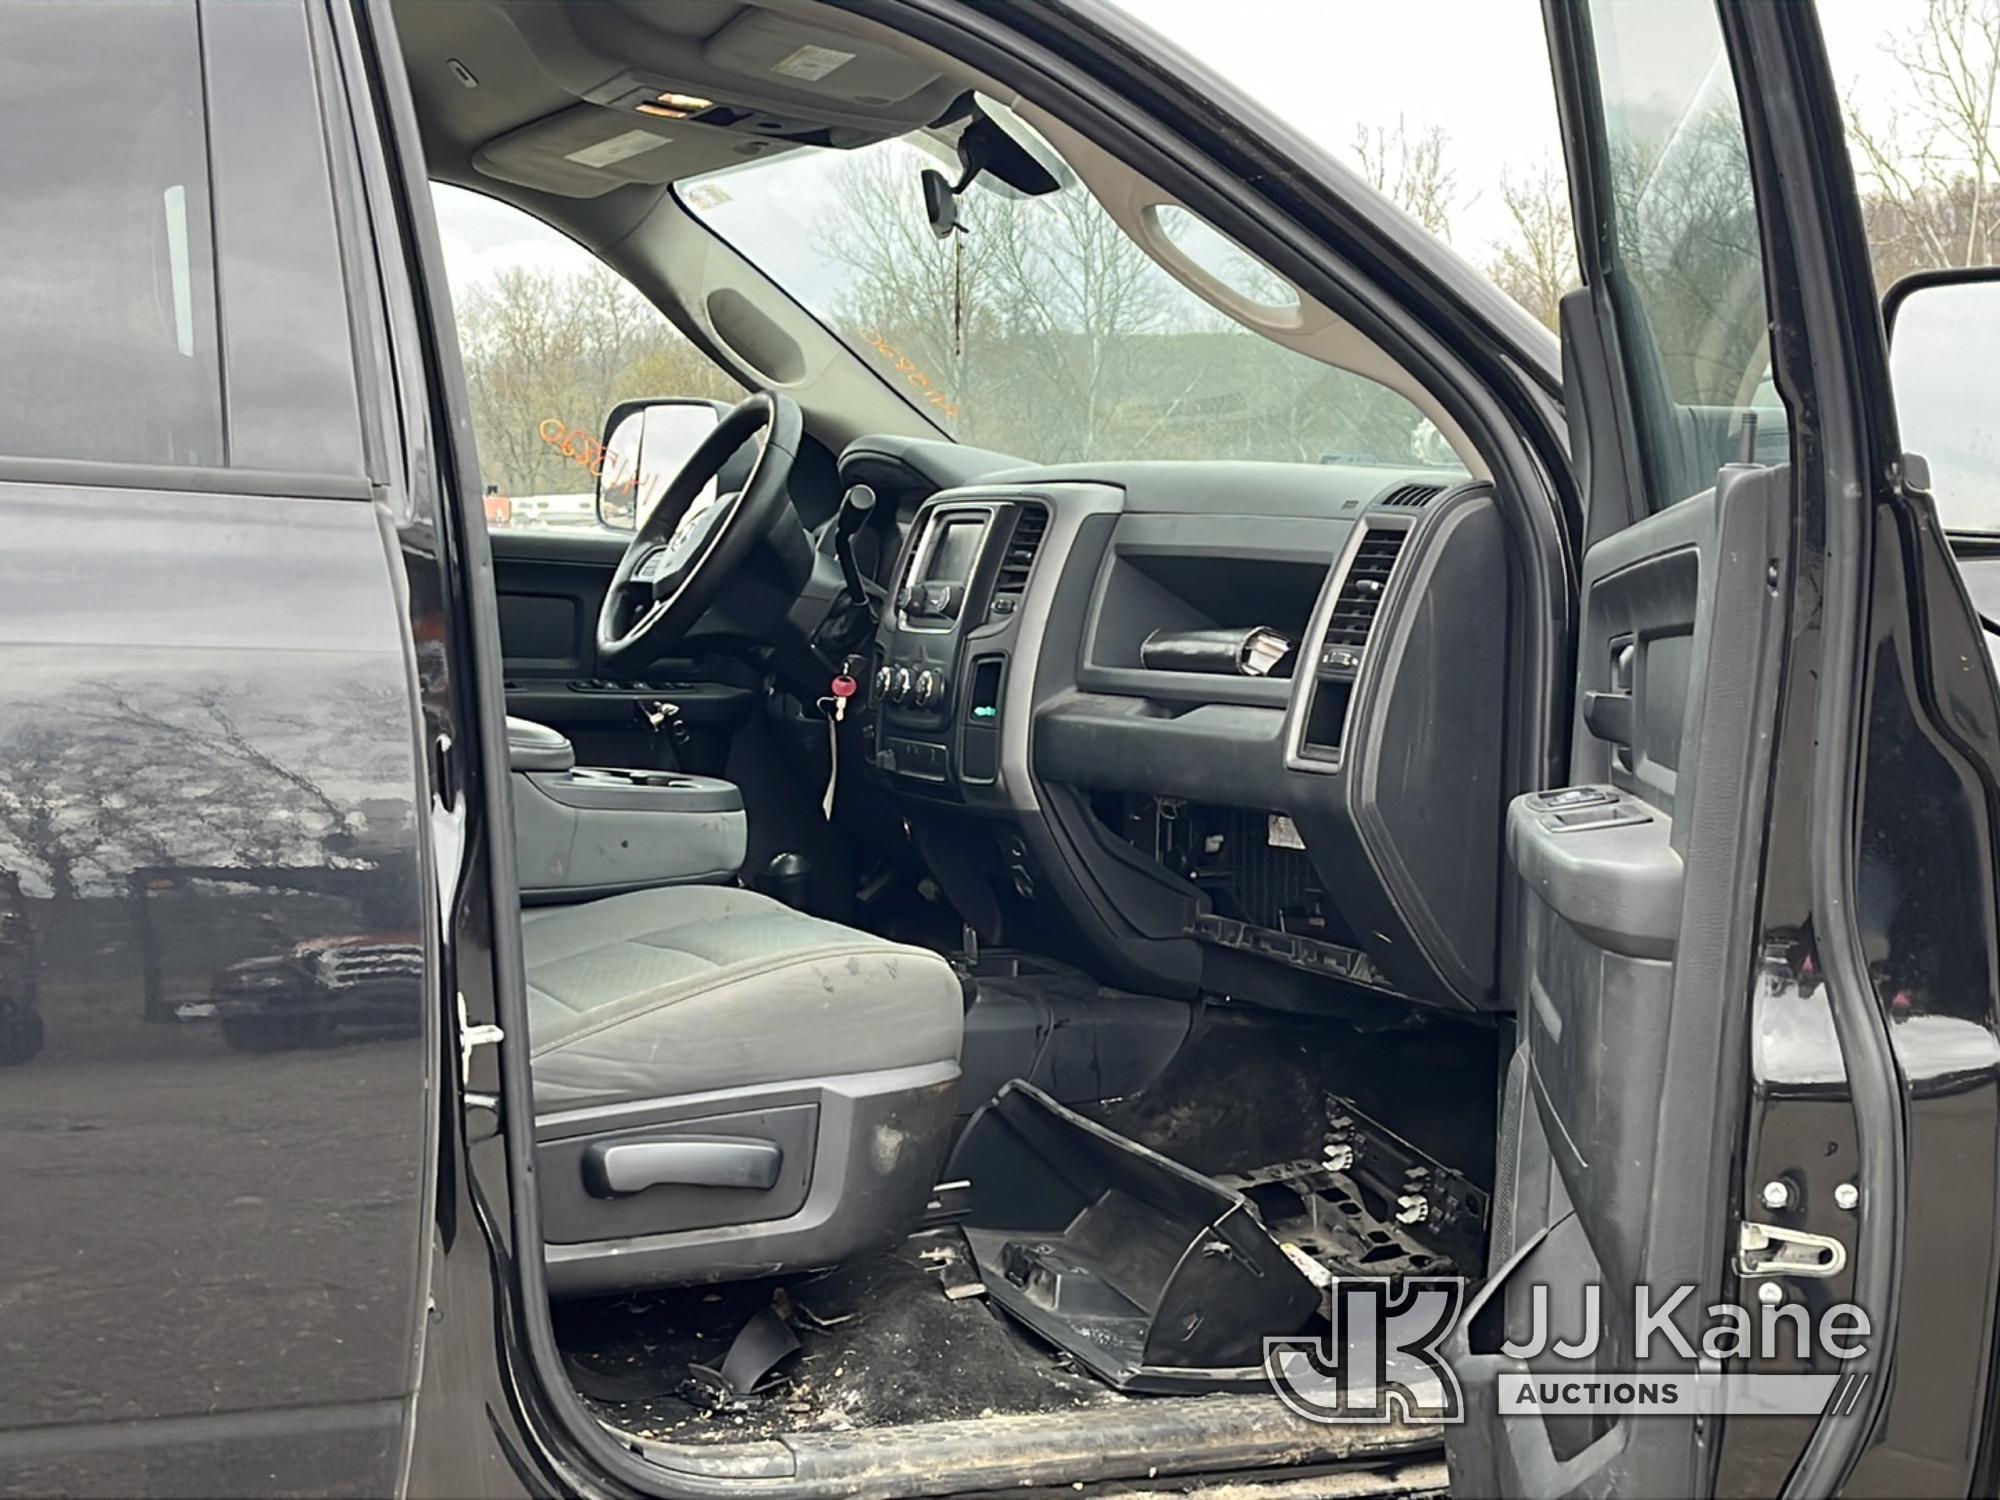 (Smock, PA) 2017 RAM 2500 4x4 Crew-Cab Pickup Truck Runs & Moves, Bad Brakes, No Power Steering, TPS